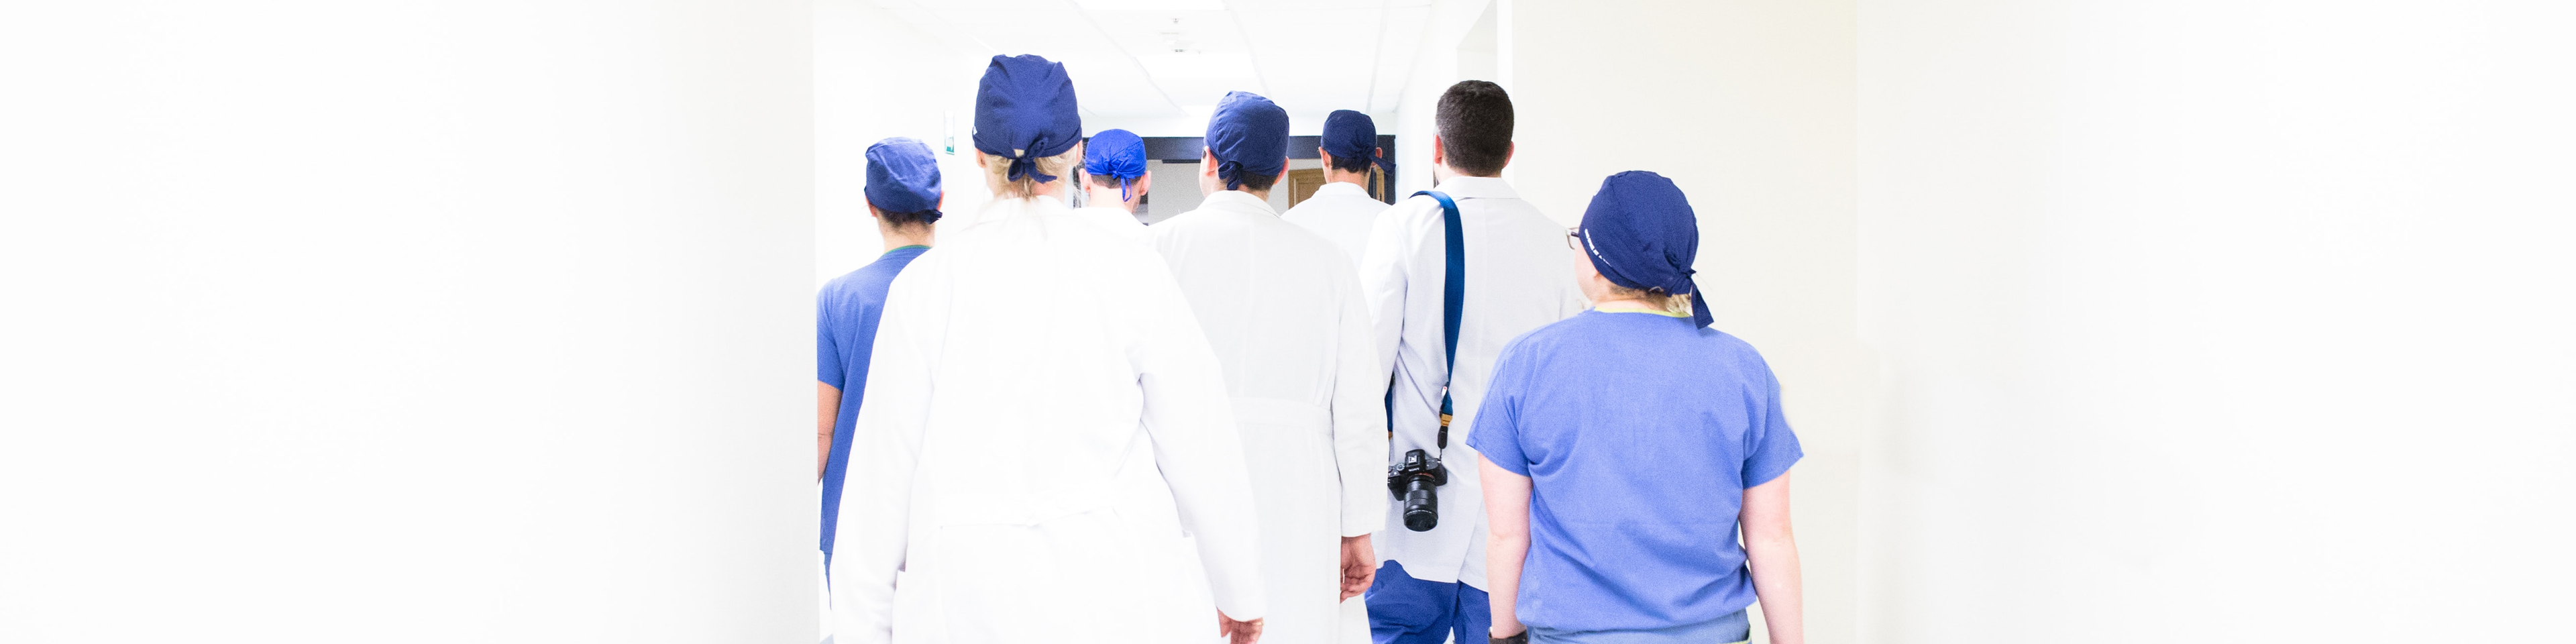 Medical team walking down hallway away from camera